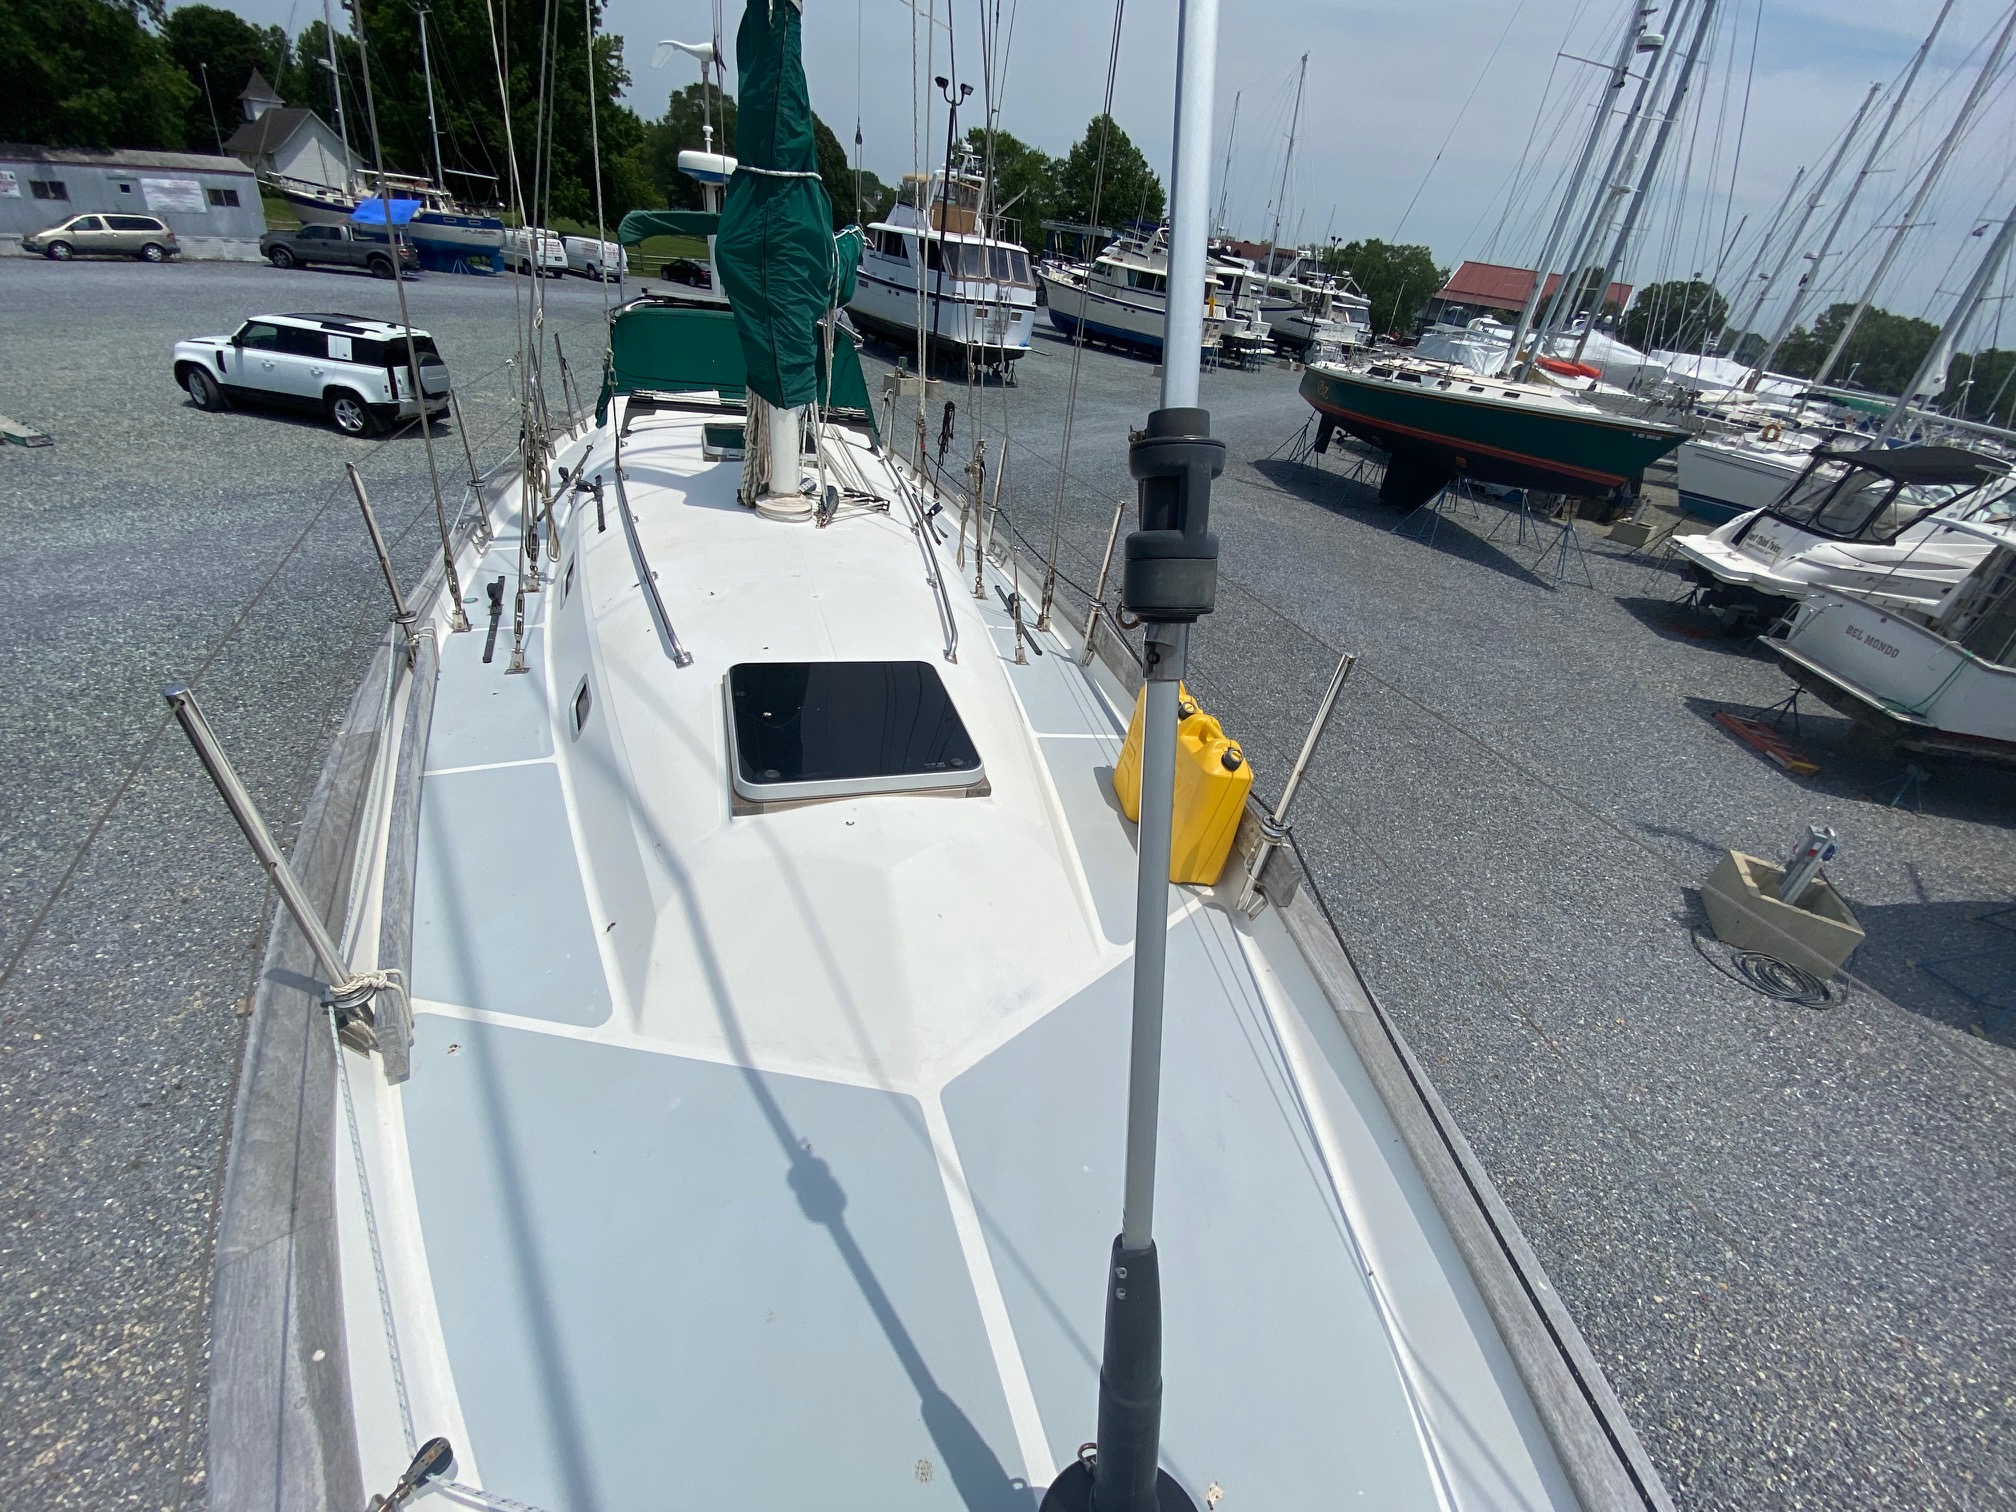 Atlantic Yacht Brokers of Annapolis